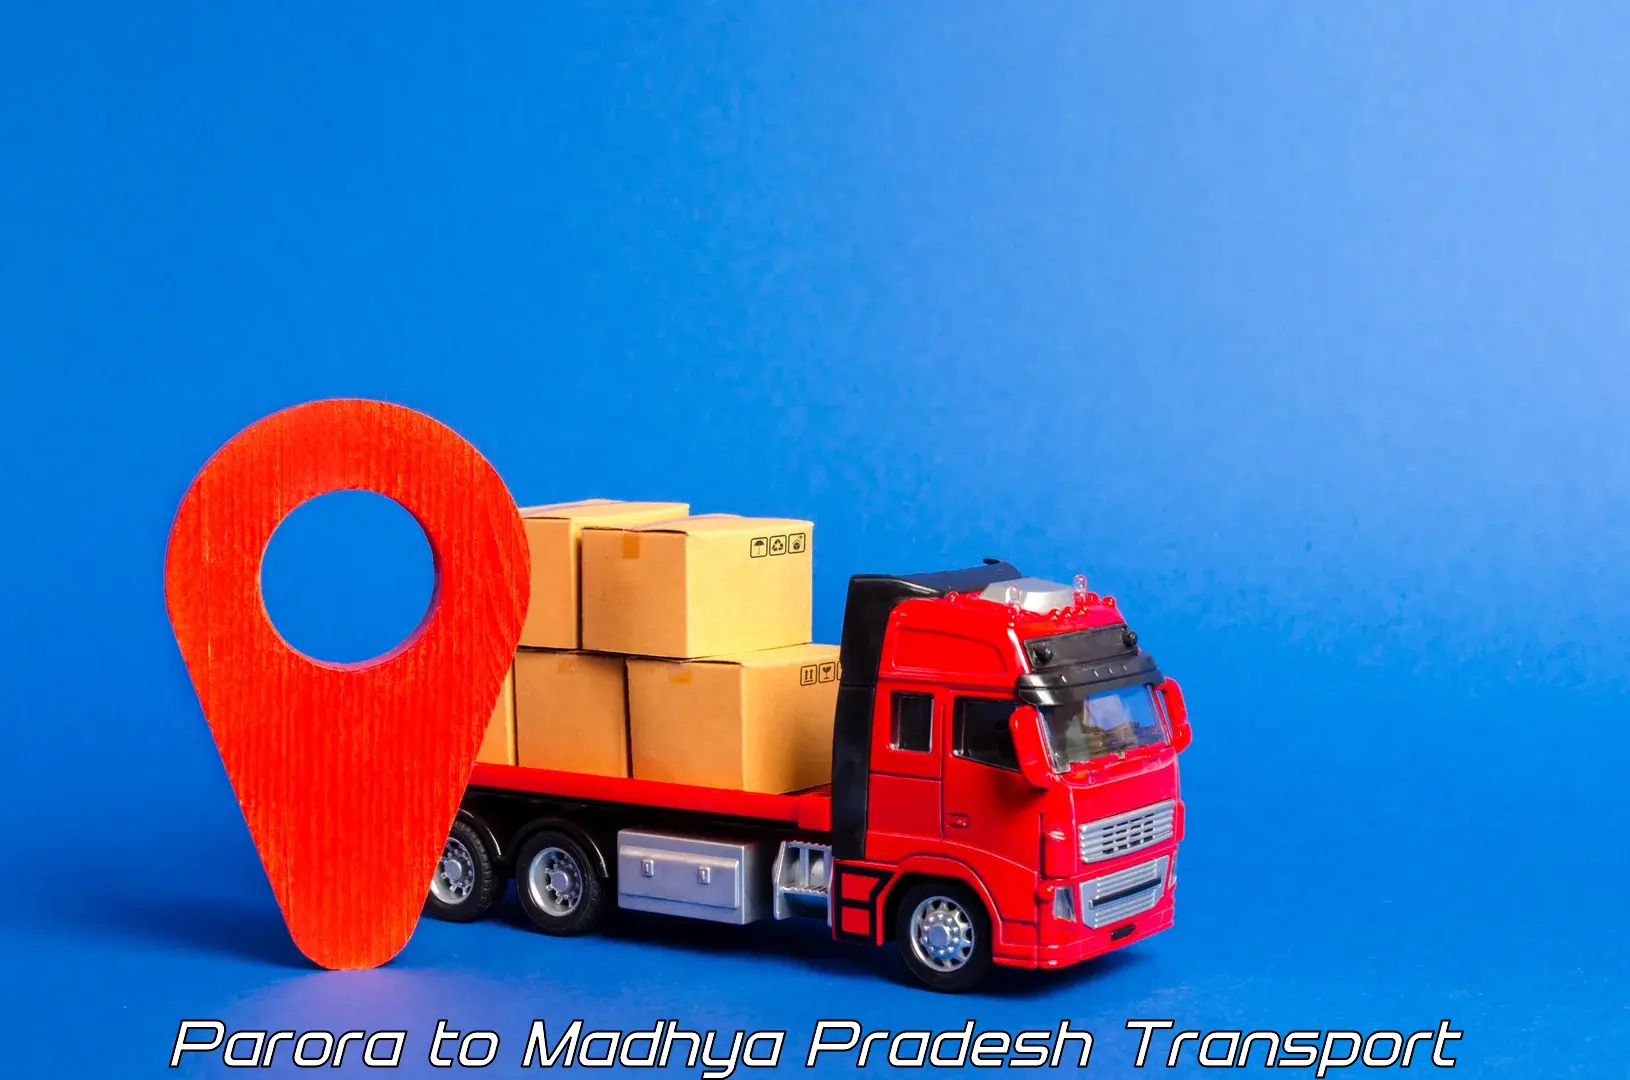 Lorry transport service Parora to Gadarwara